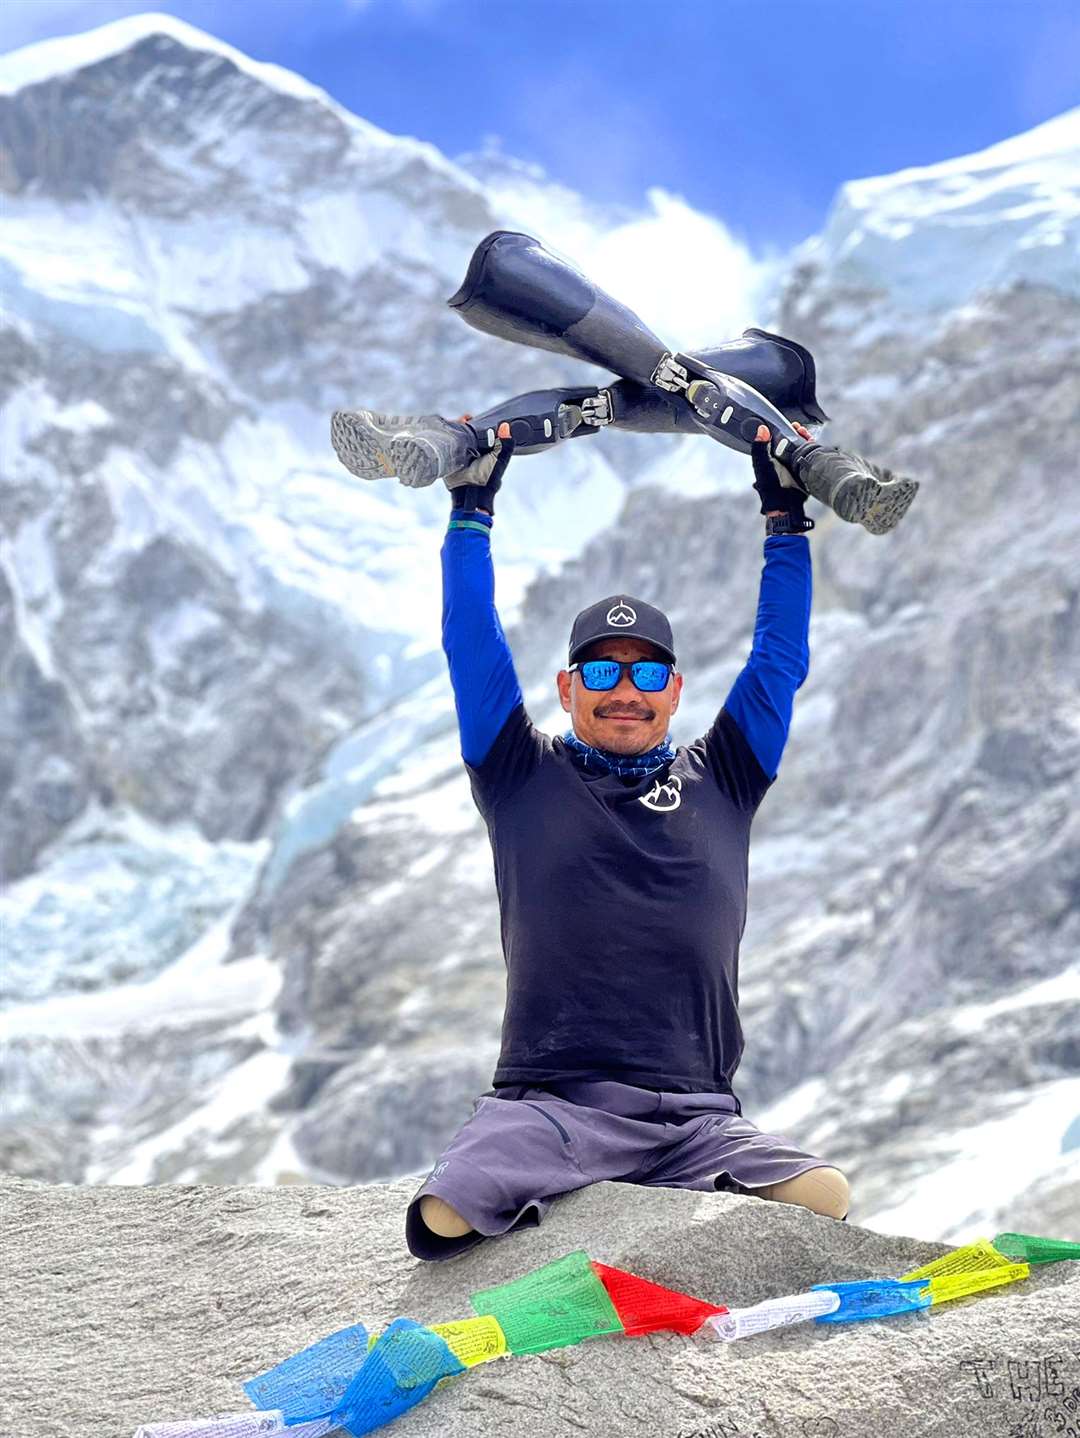 Hari Budha Magar is training for the biggest climb of his life